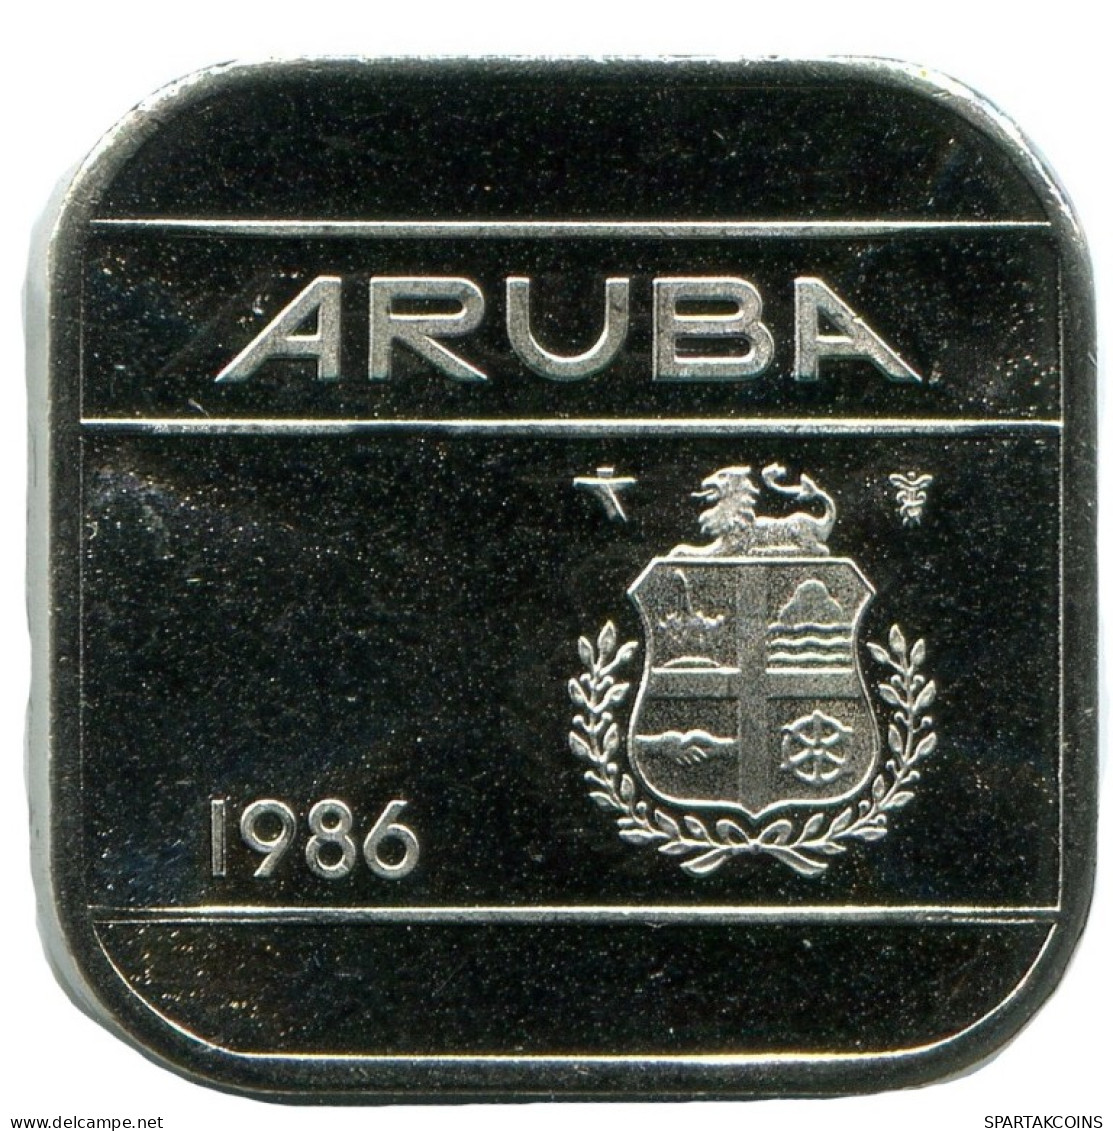 50 CENTS 1986 ARUBA Moneda (From BU Mint Set) #AH053.E.A - Aruba